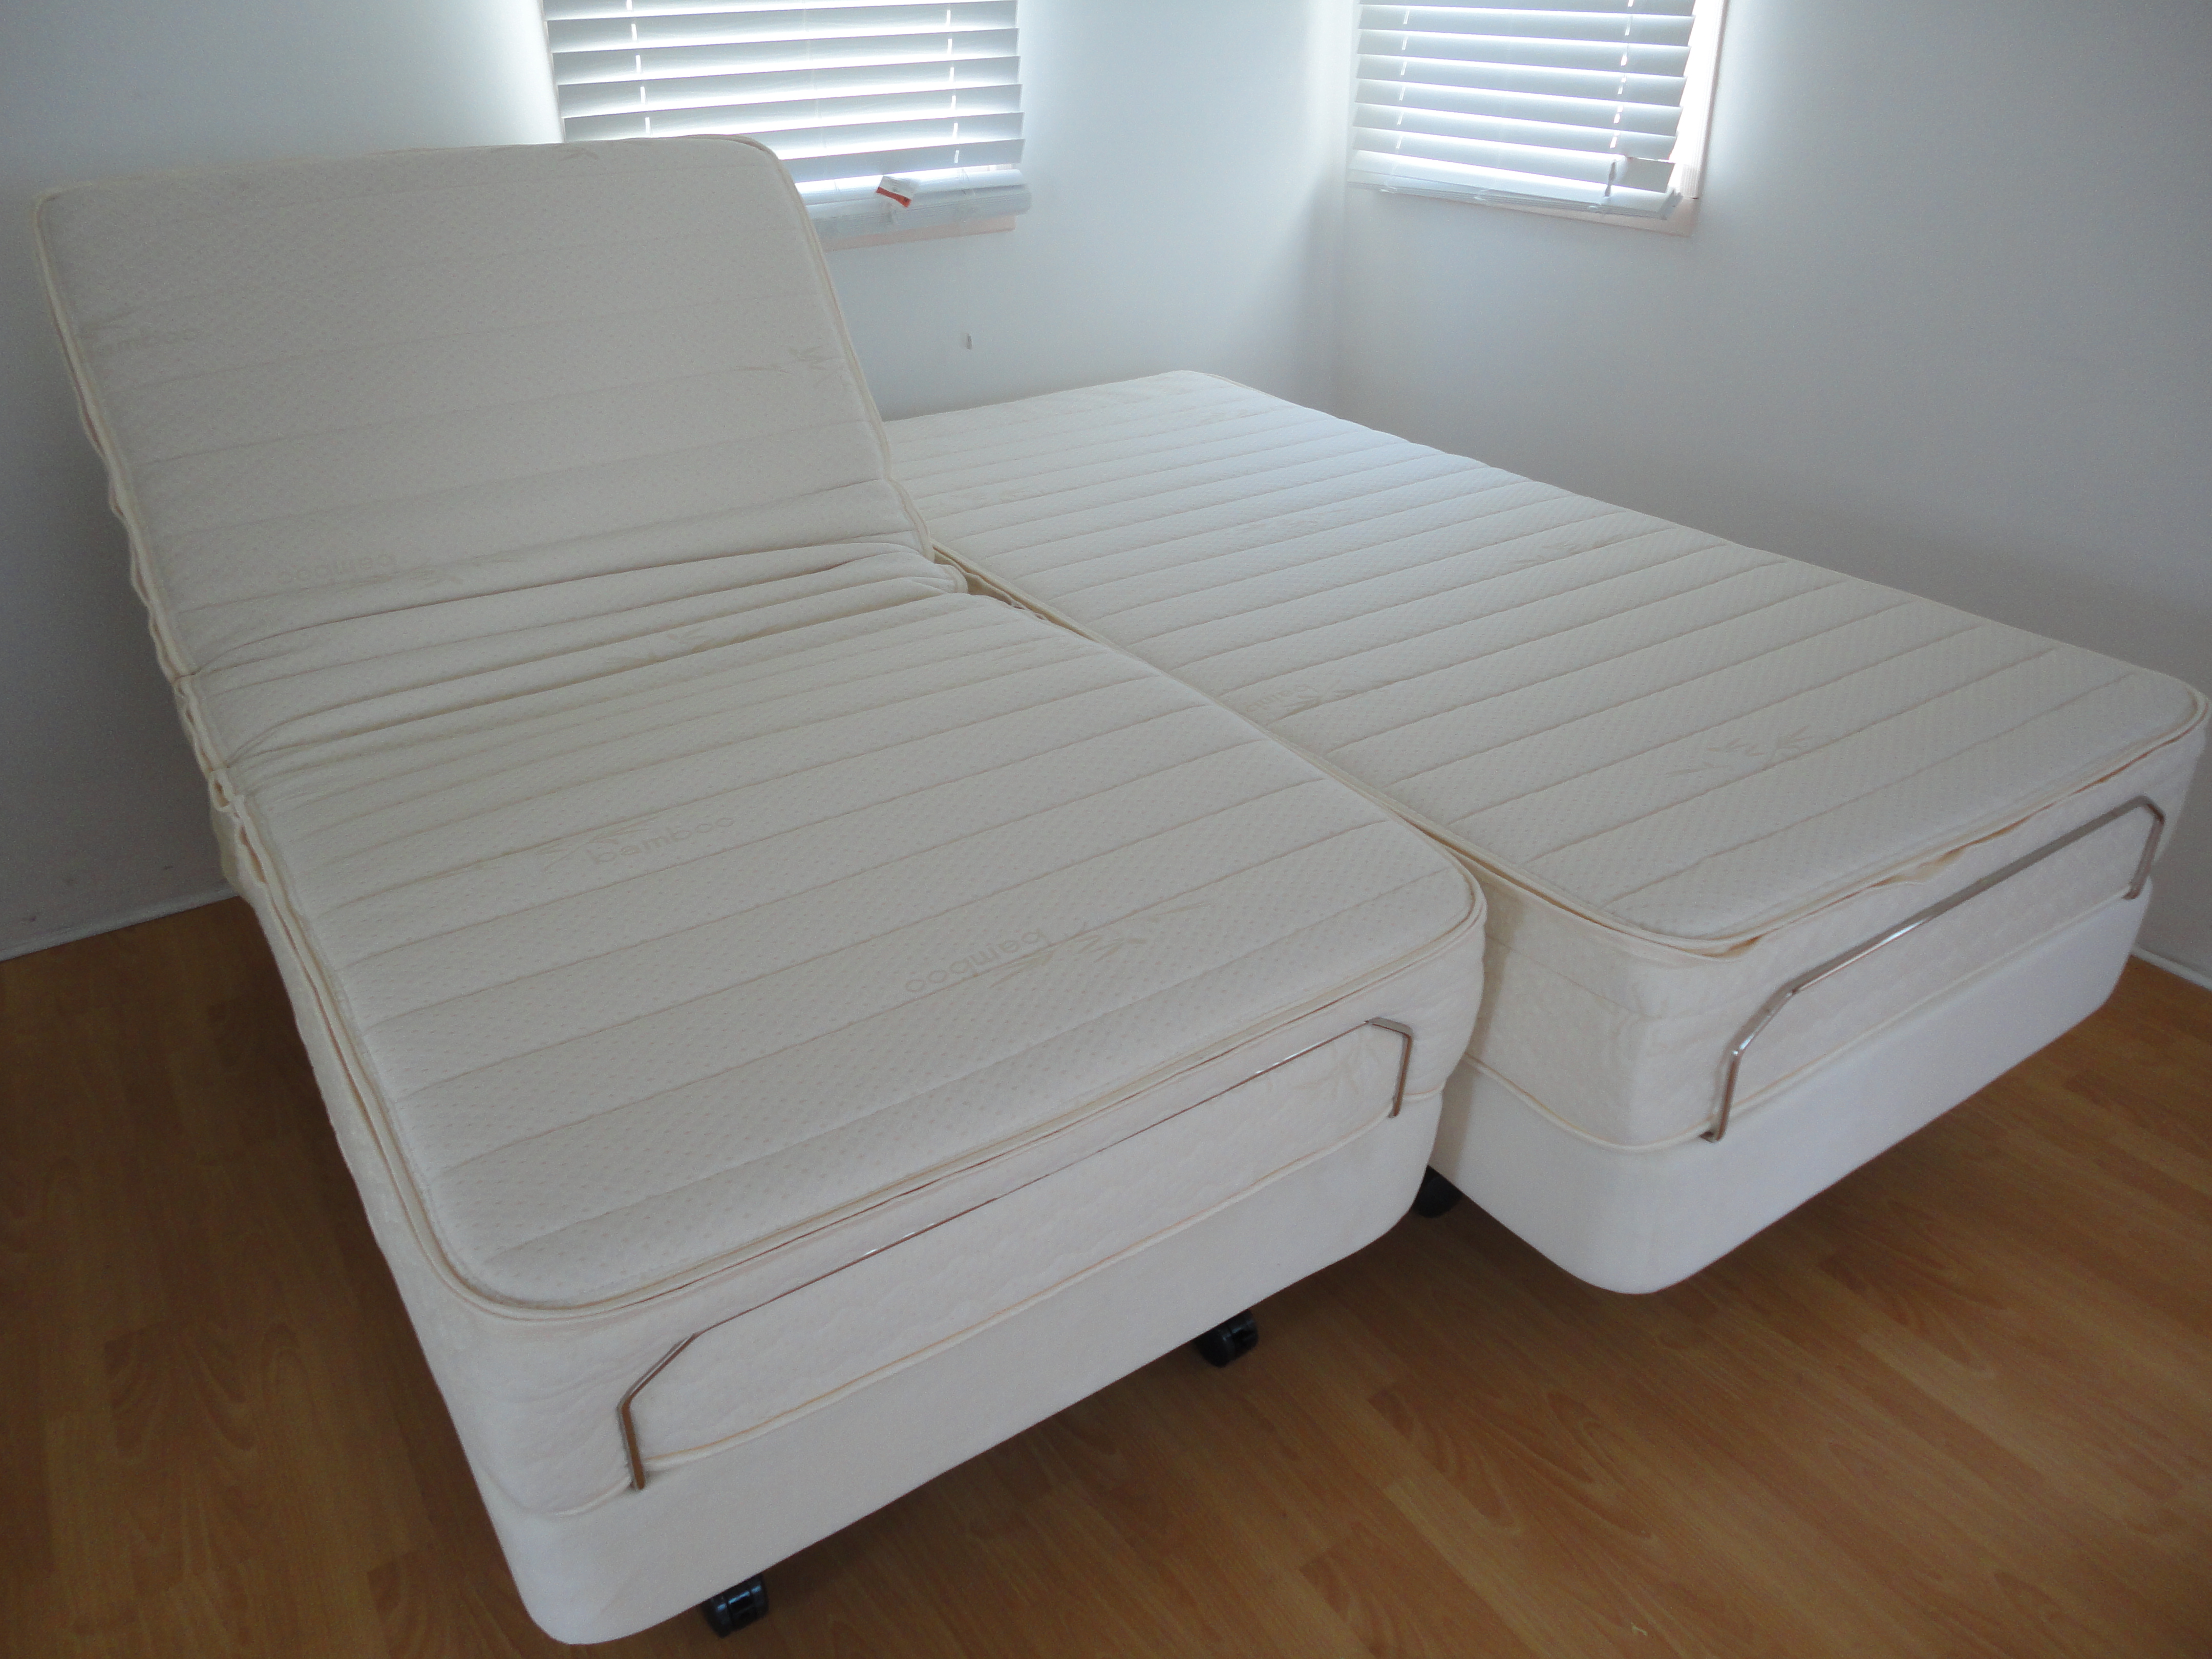 Kings Adjustable Beds Dual Kingsize, Dual King Size Bed